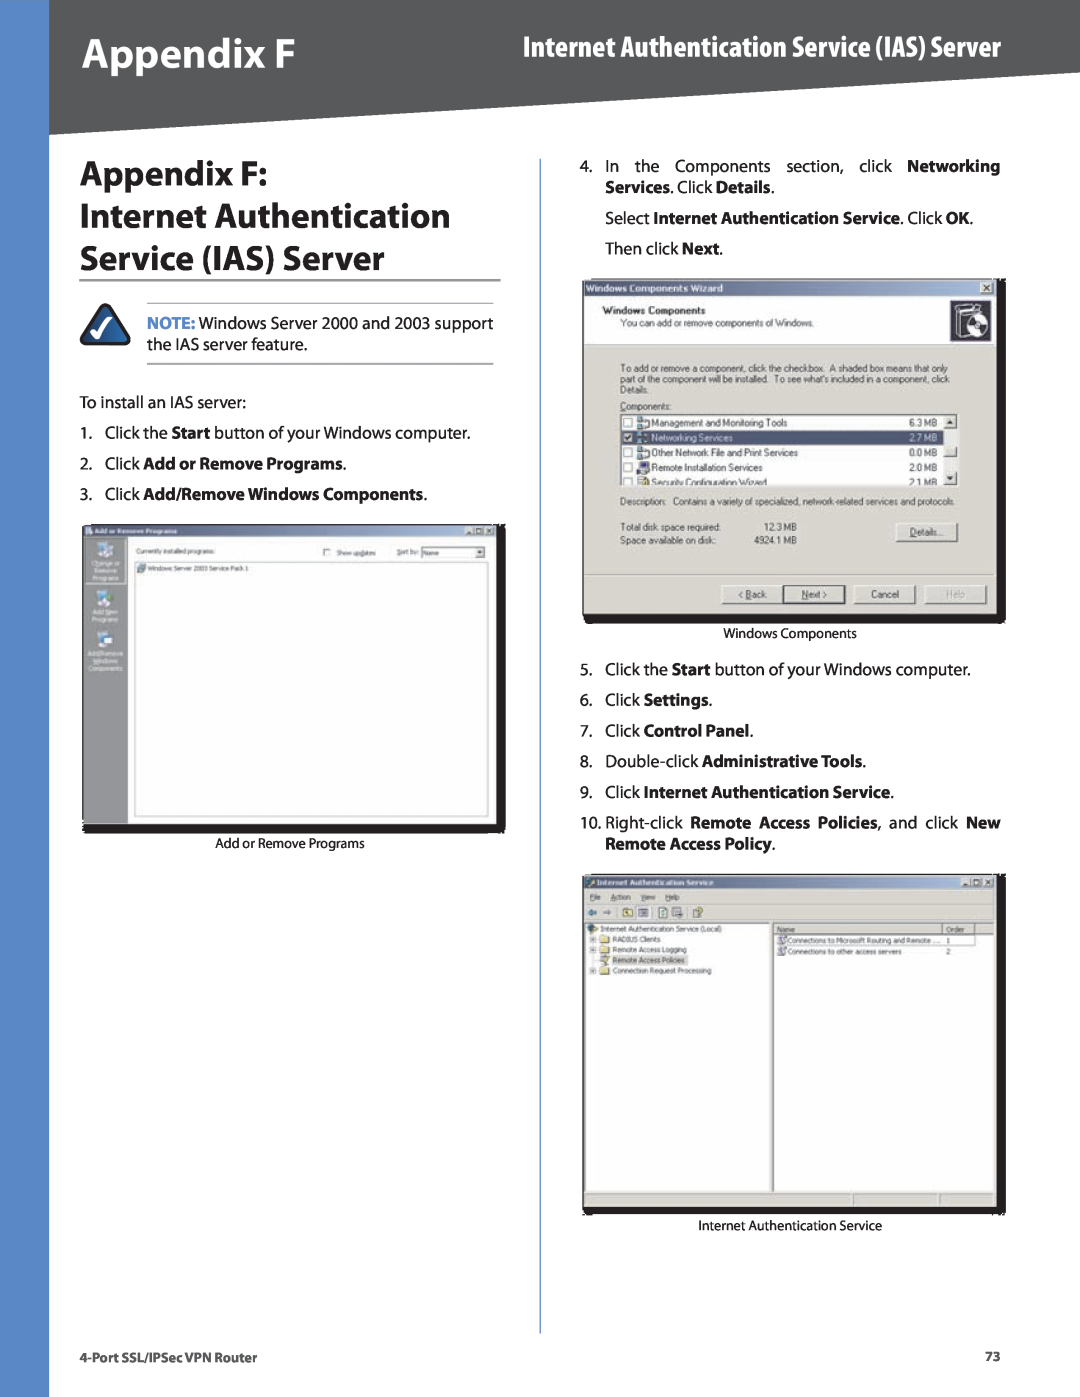 Cisco Systems RVL200 manual Appendix F Internet Authentication Service IAS Server, Click Add or Remove Programs 